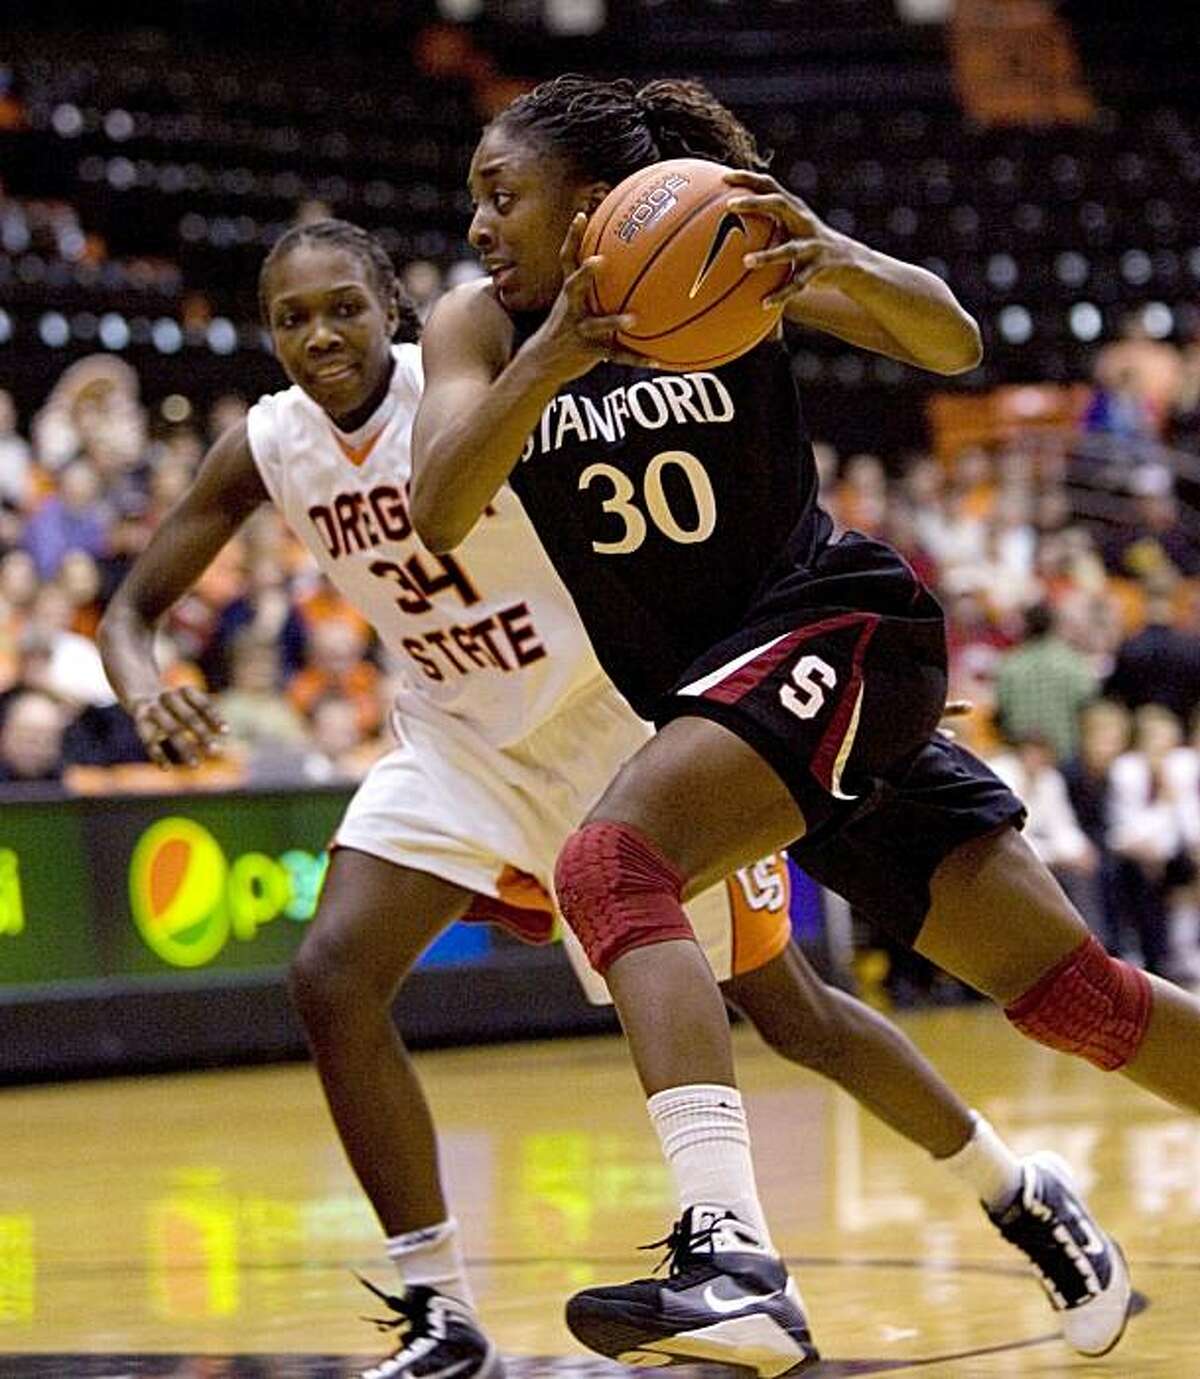 Stanford women's basketball